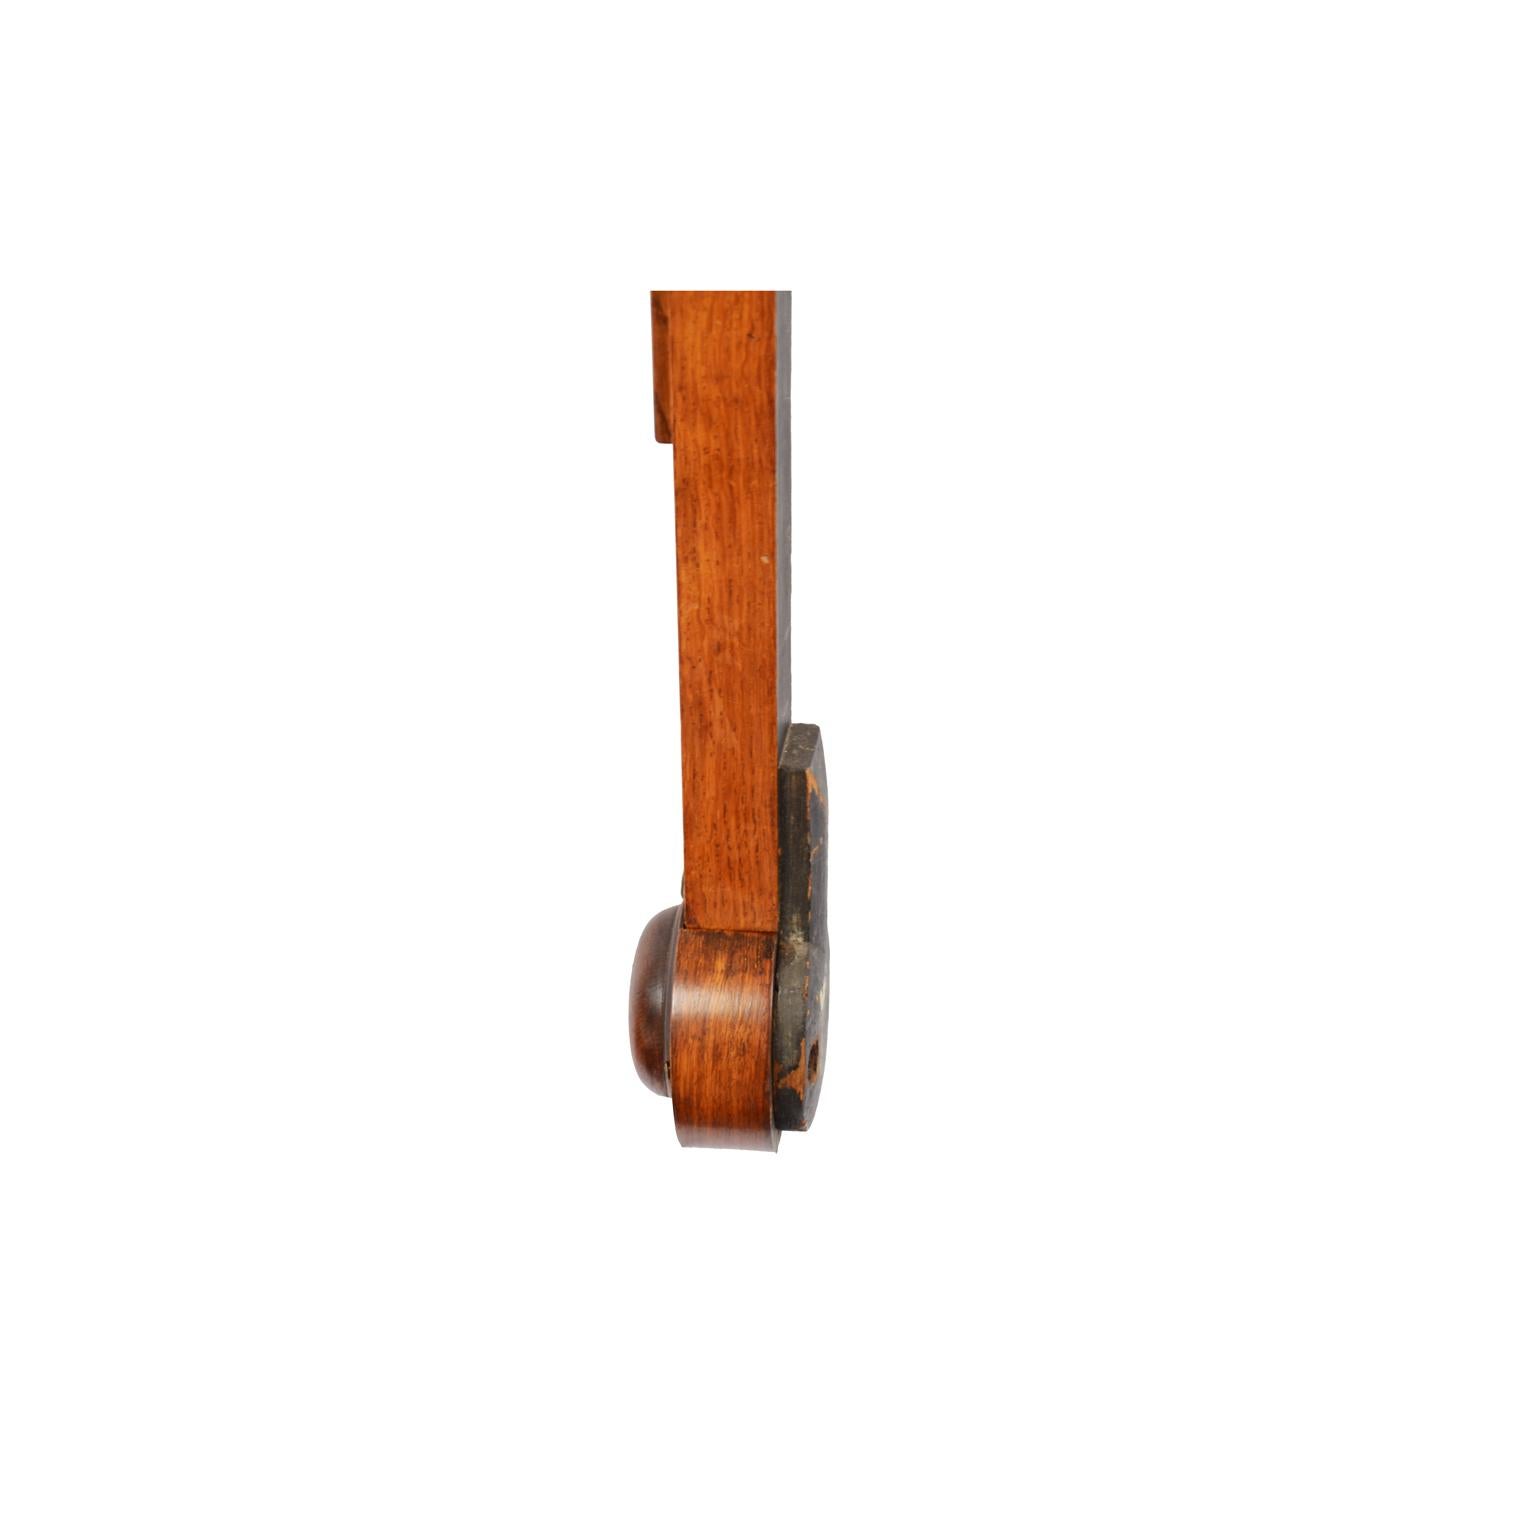 1850s Oak Wodd Stick Barometer by Negretti & Zambra Weather Measuring Instrument For Sale 4